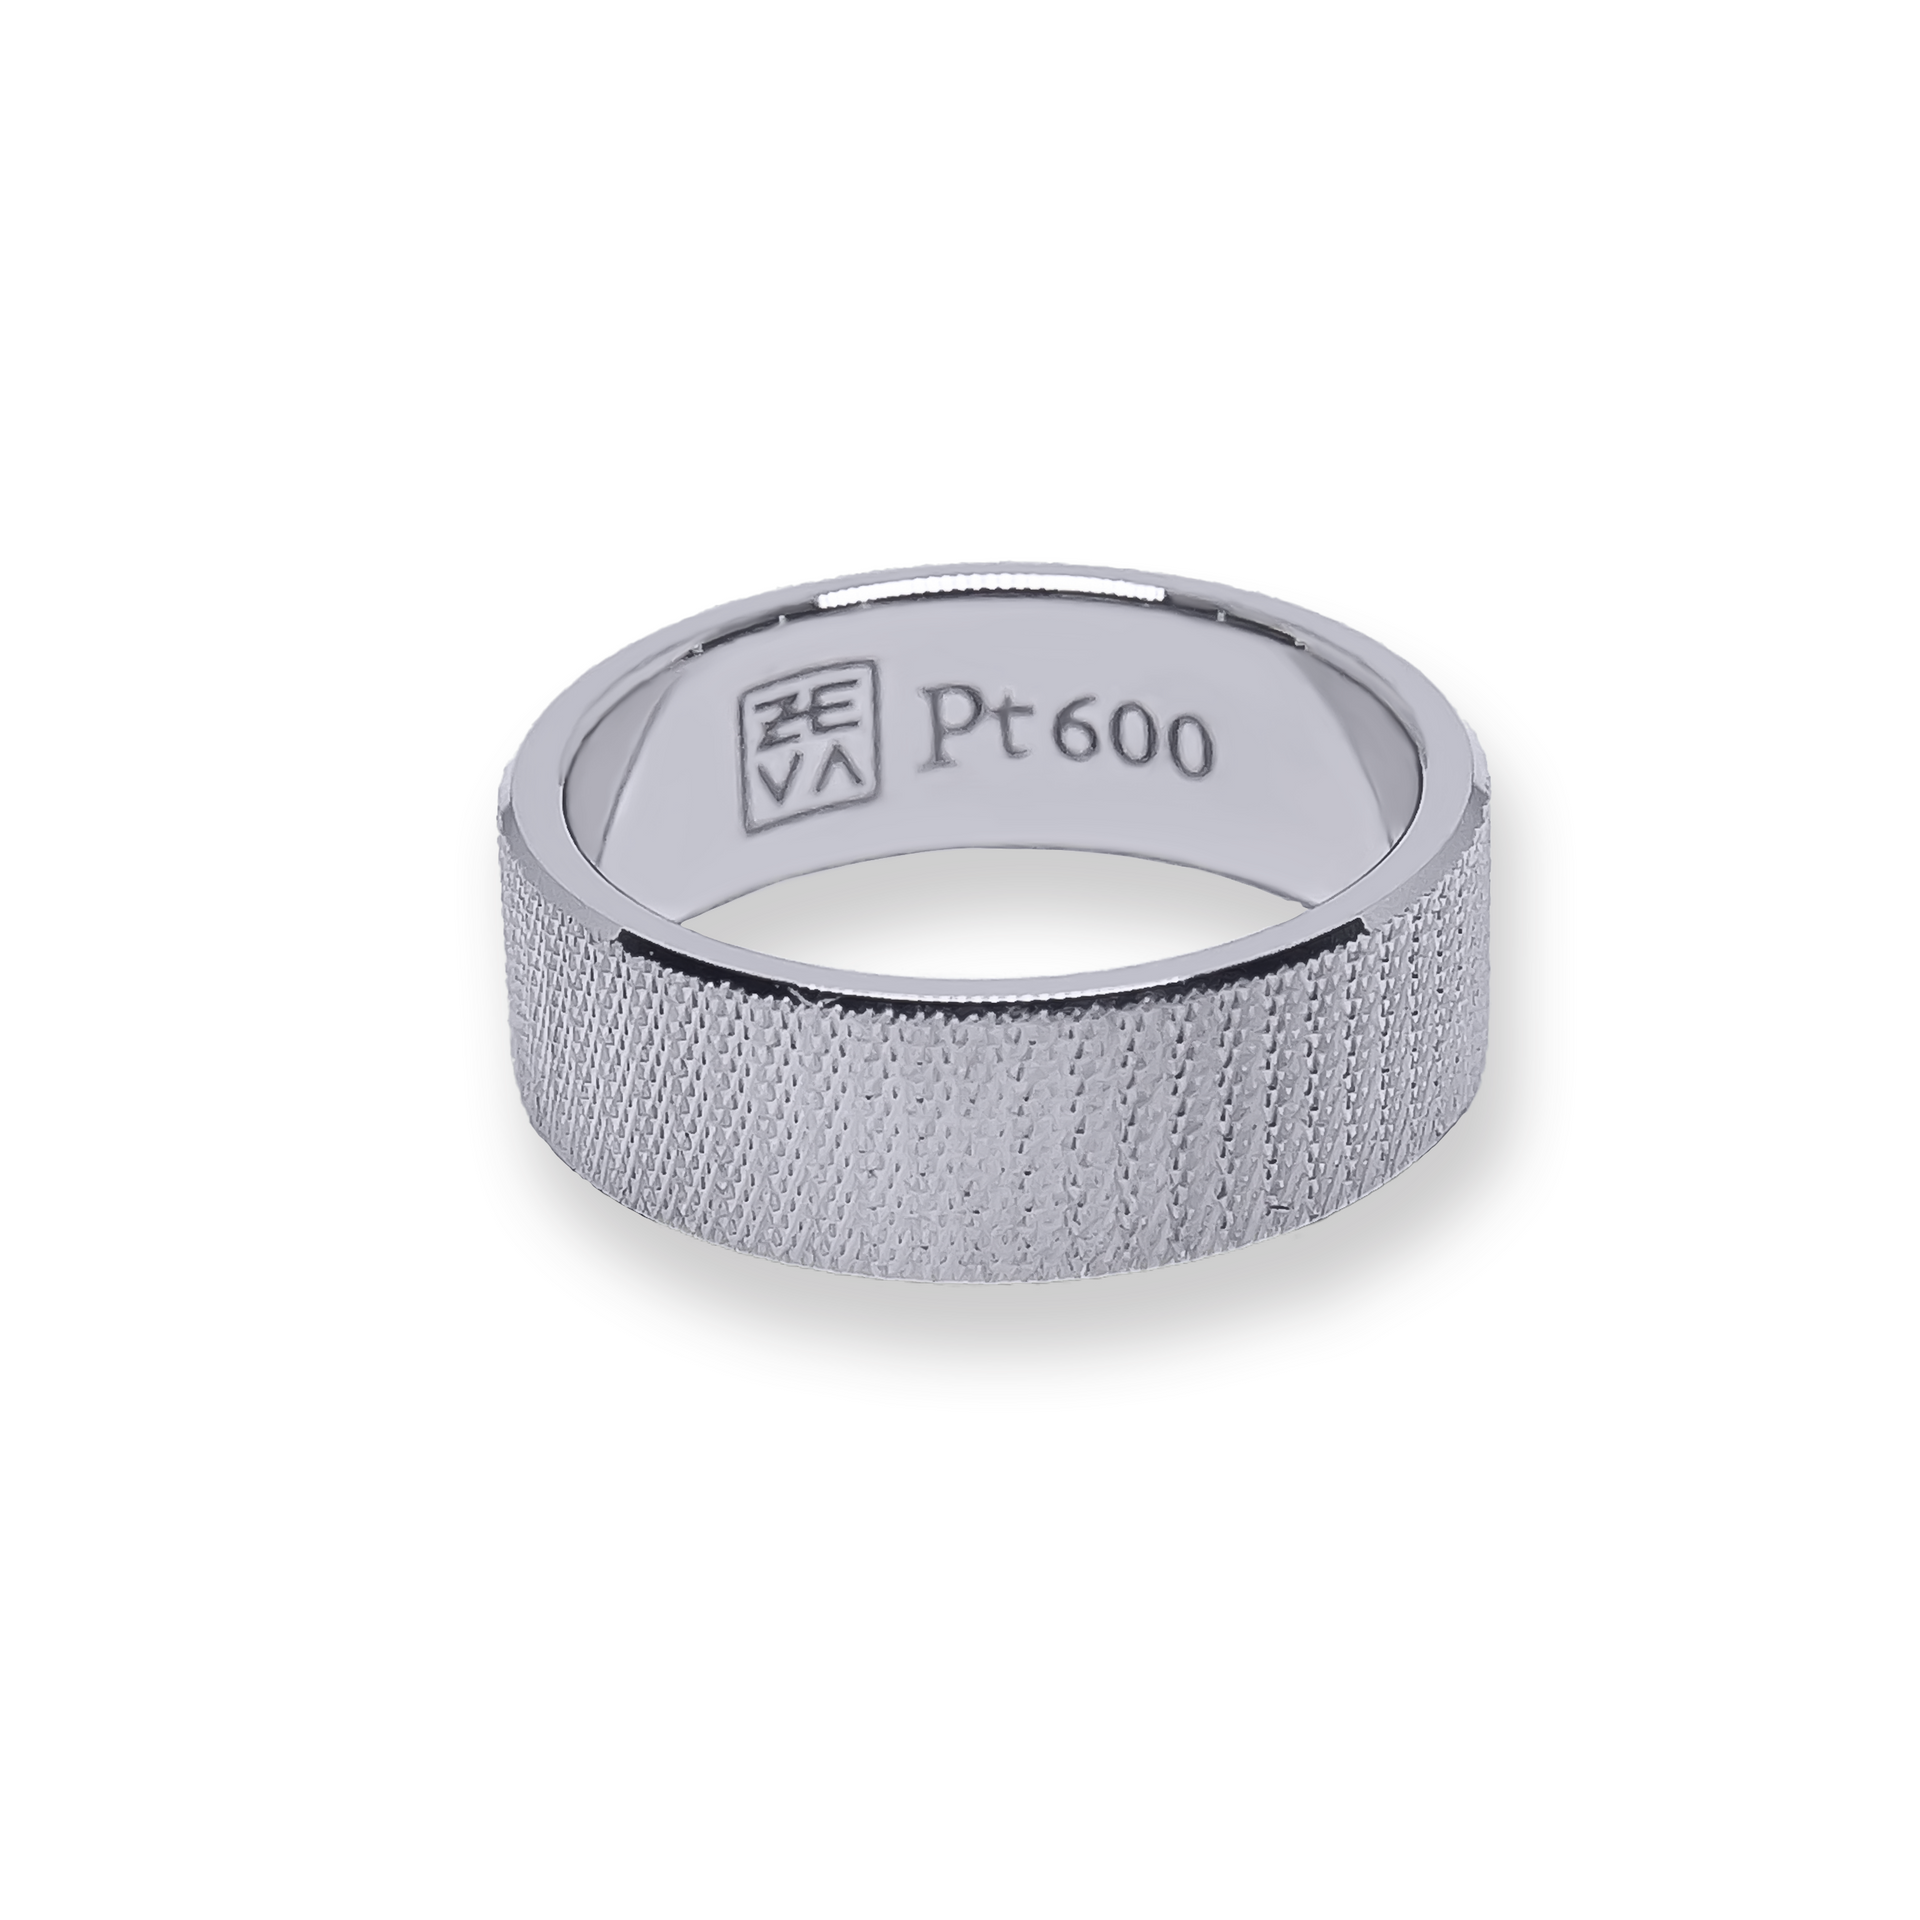 Ring WIRED 6mm Platinum 600